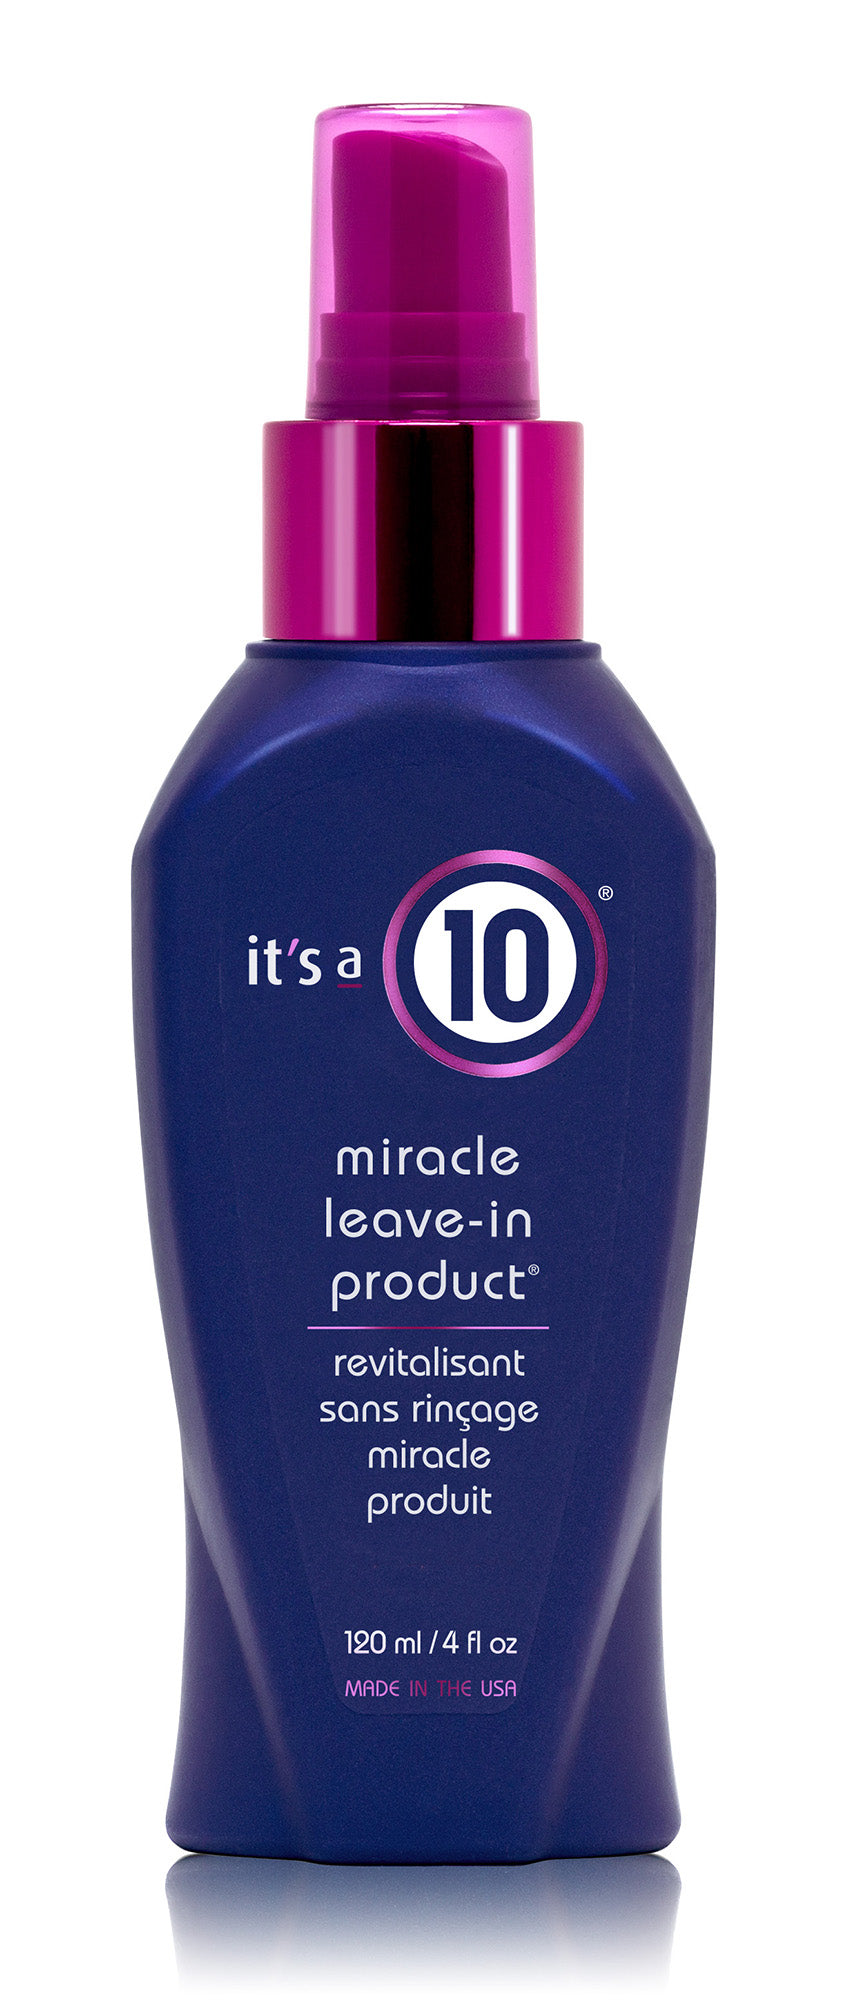 It's A 10 Miracle Shine Spray - 4 fl oz bottle